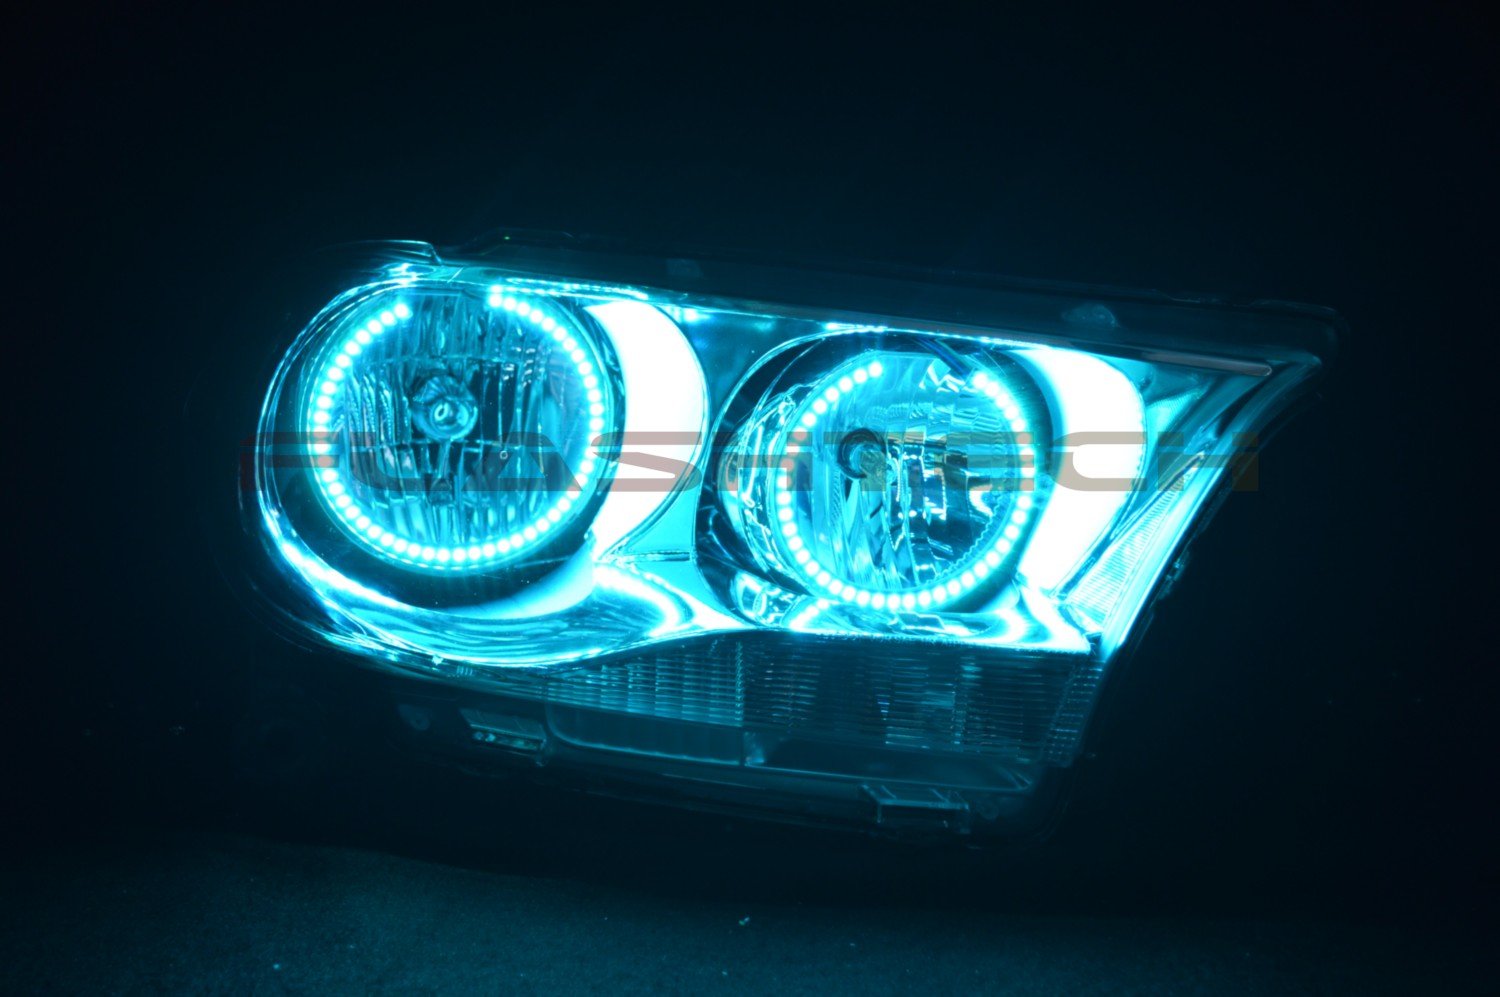 Dodge-Durango-2011, 2012, 2013-LED-Halo-Headlights-RGB-Bluetooth RF Remote-DO-DU1113-V3HBTRF